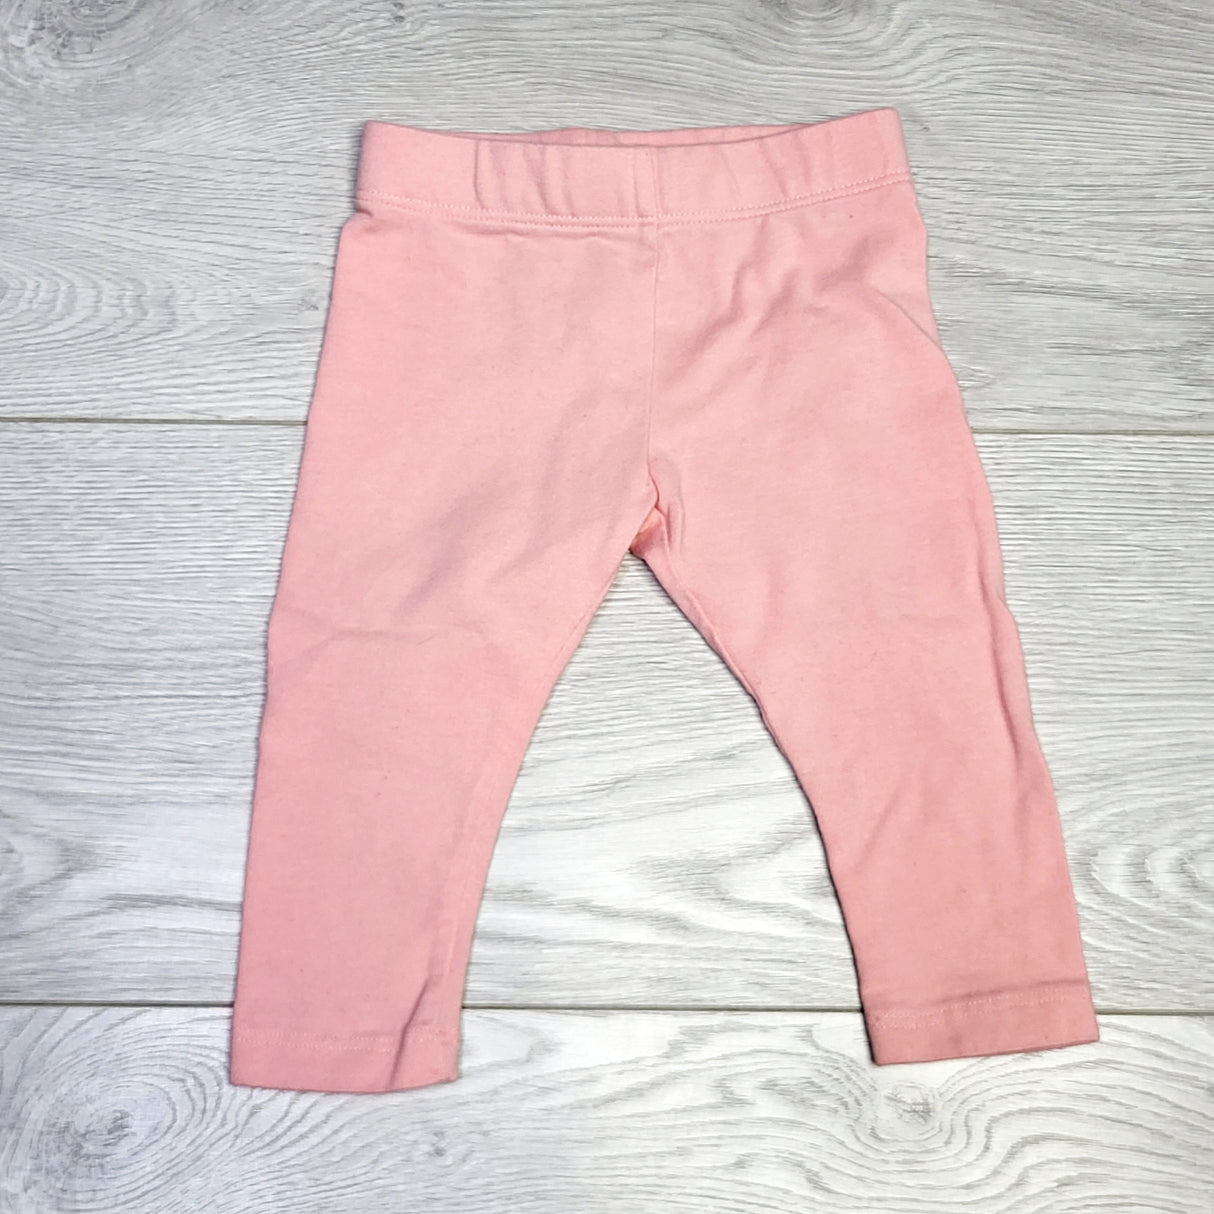 KJHN1 - George pink cotton leggings. Size 6-12 months